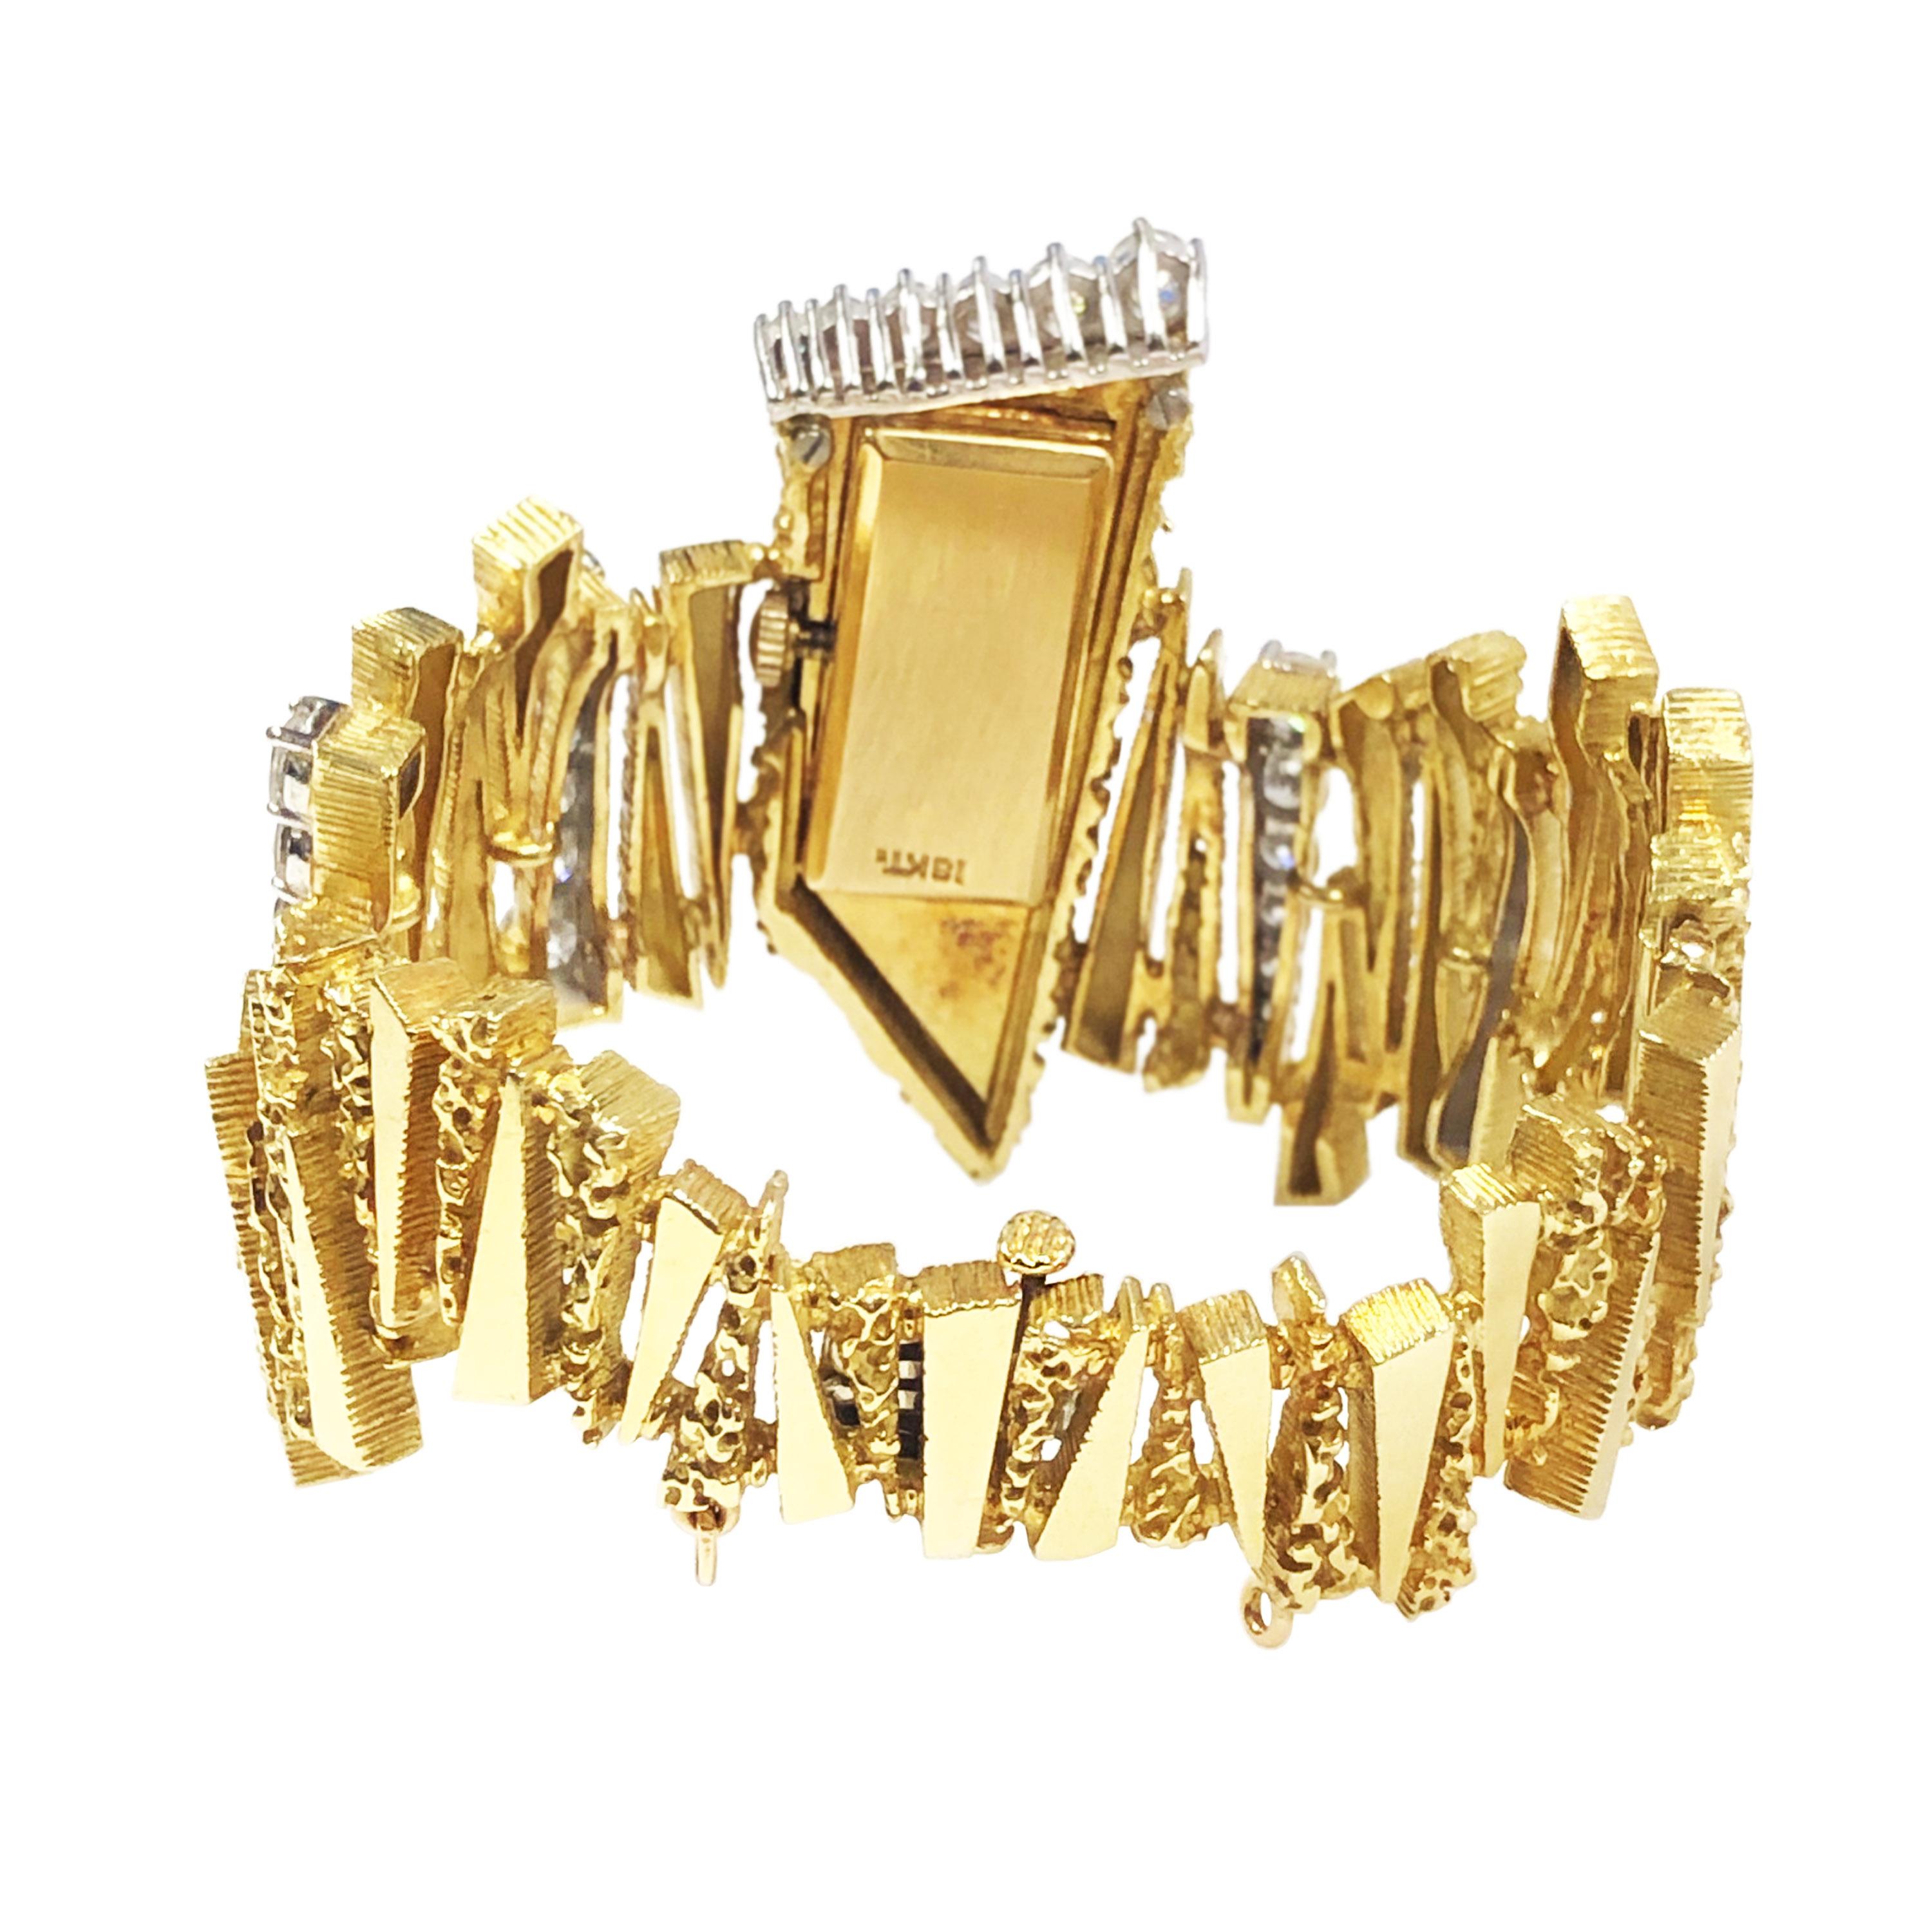 Modernist Ebel Mid-Century Modern Yellow Gold and Diamond Bracelet Wrist Watch